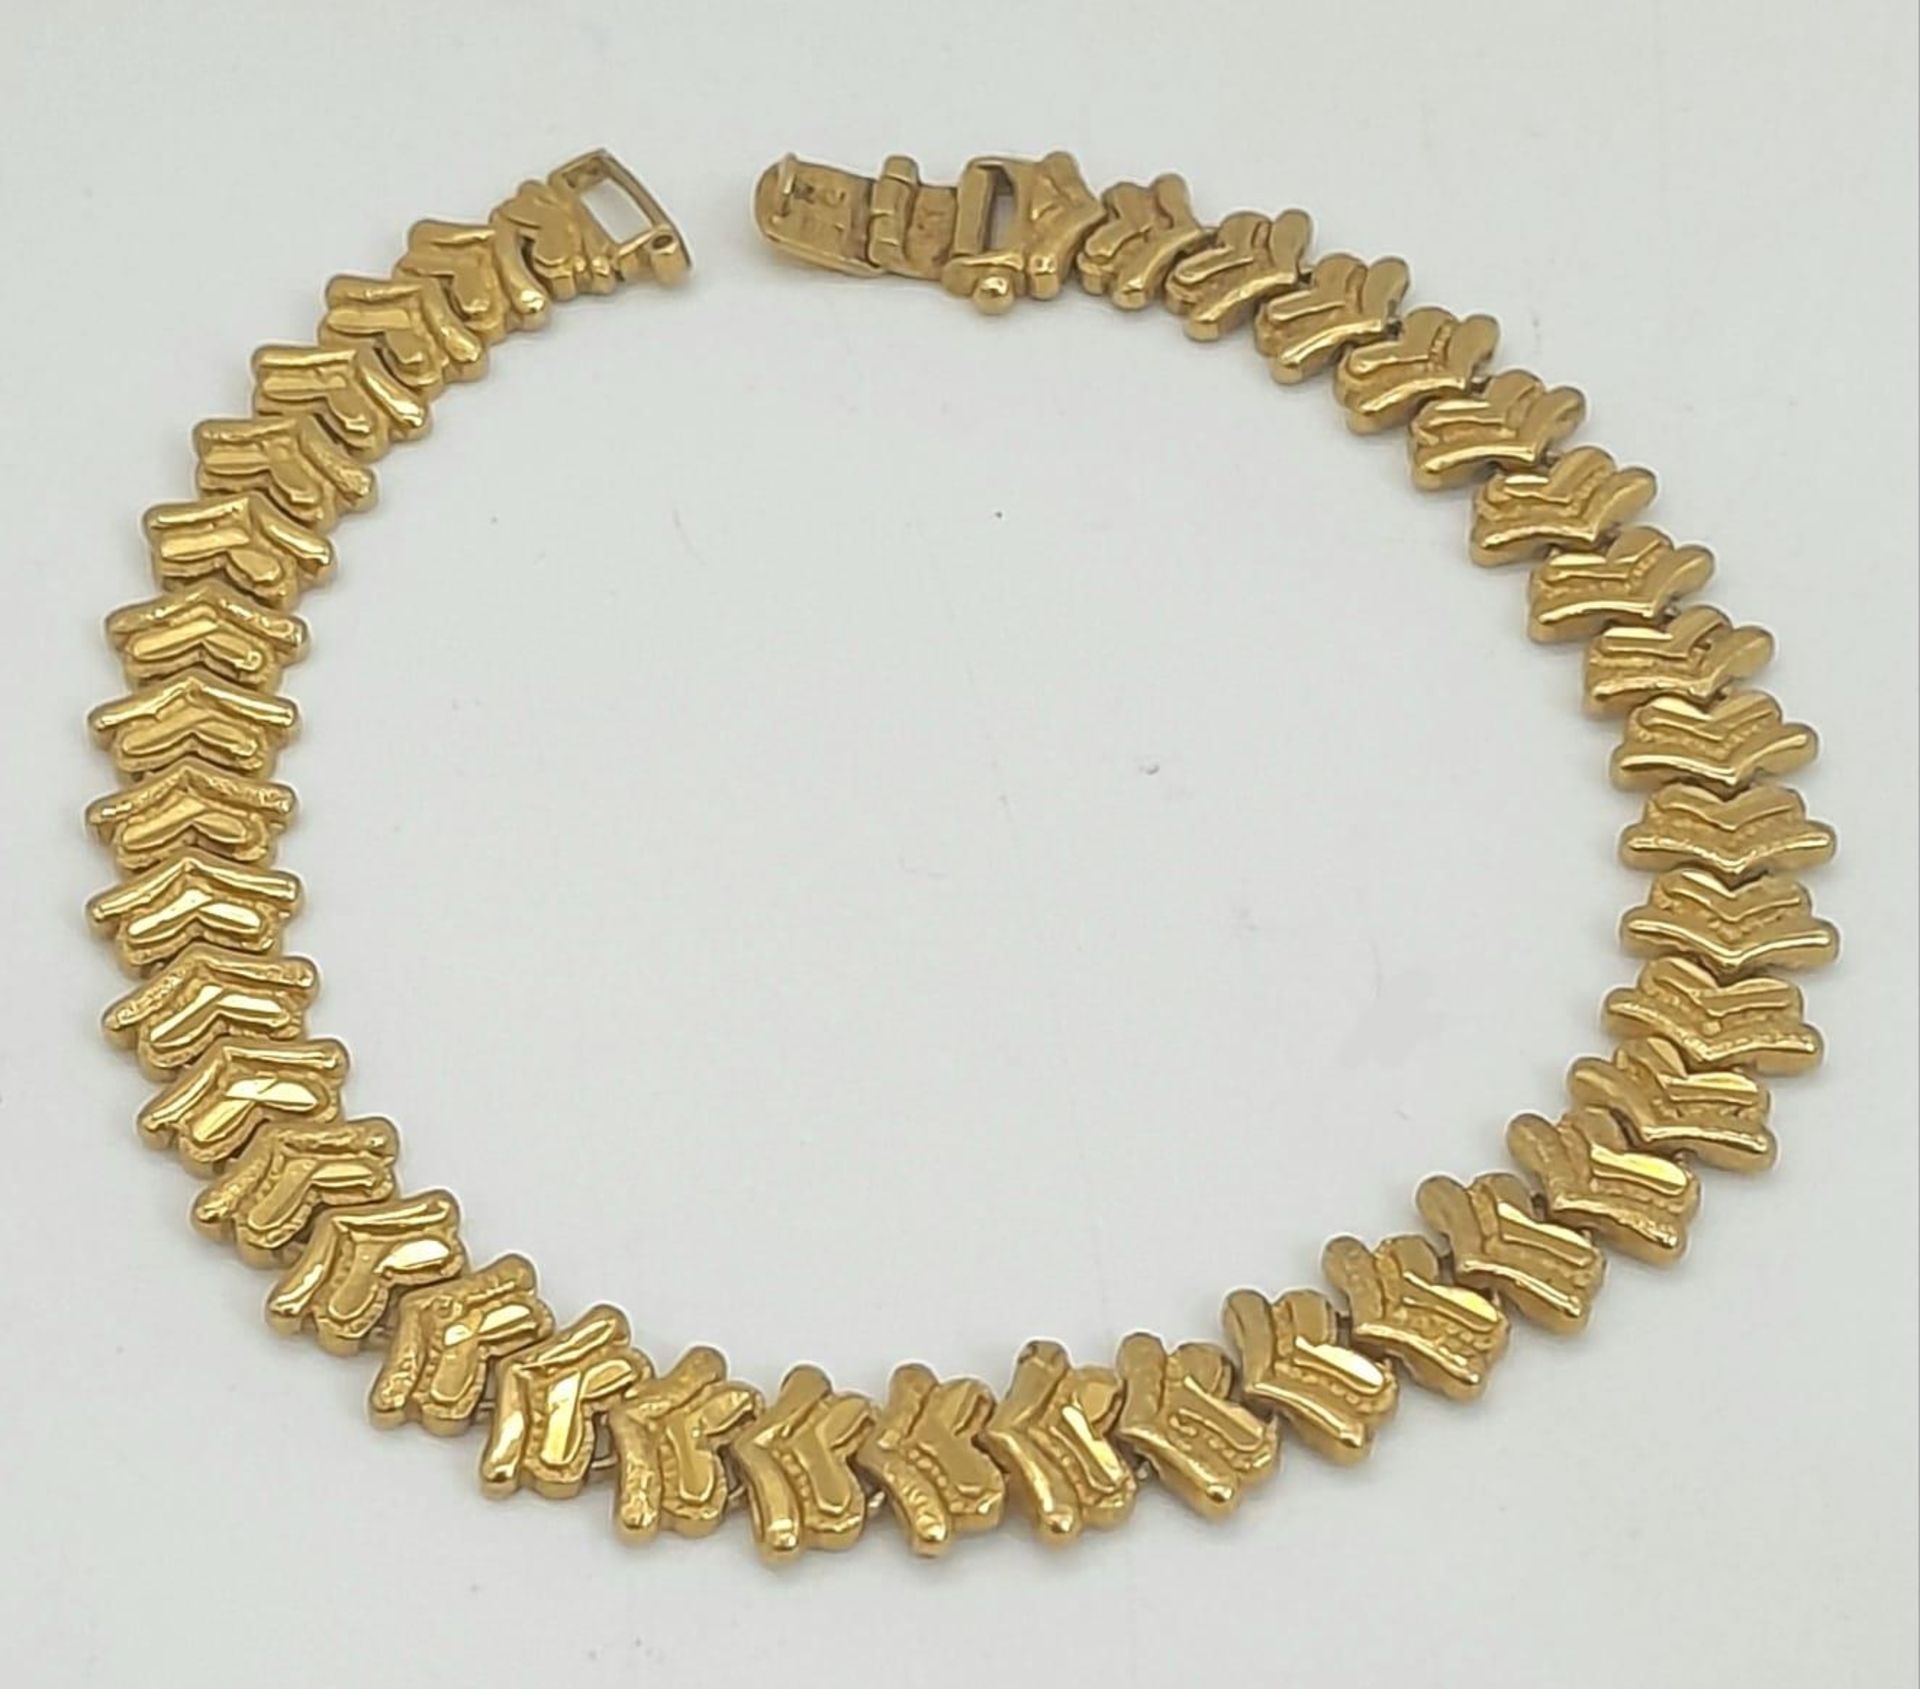 A 22k Yellow Gold Asian Inspired Chevron Bracelet. 18cm. 16.8g weight. 916 hallmark.